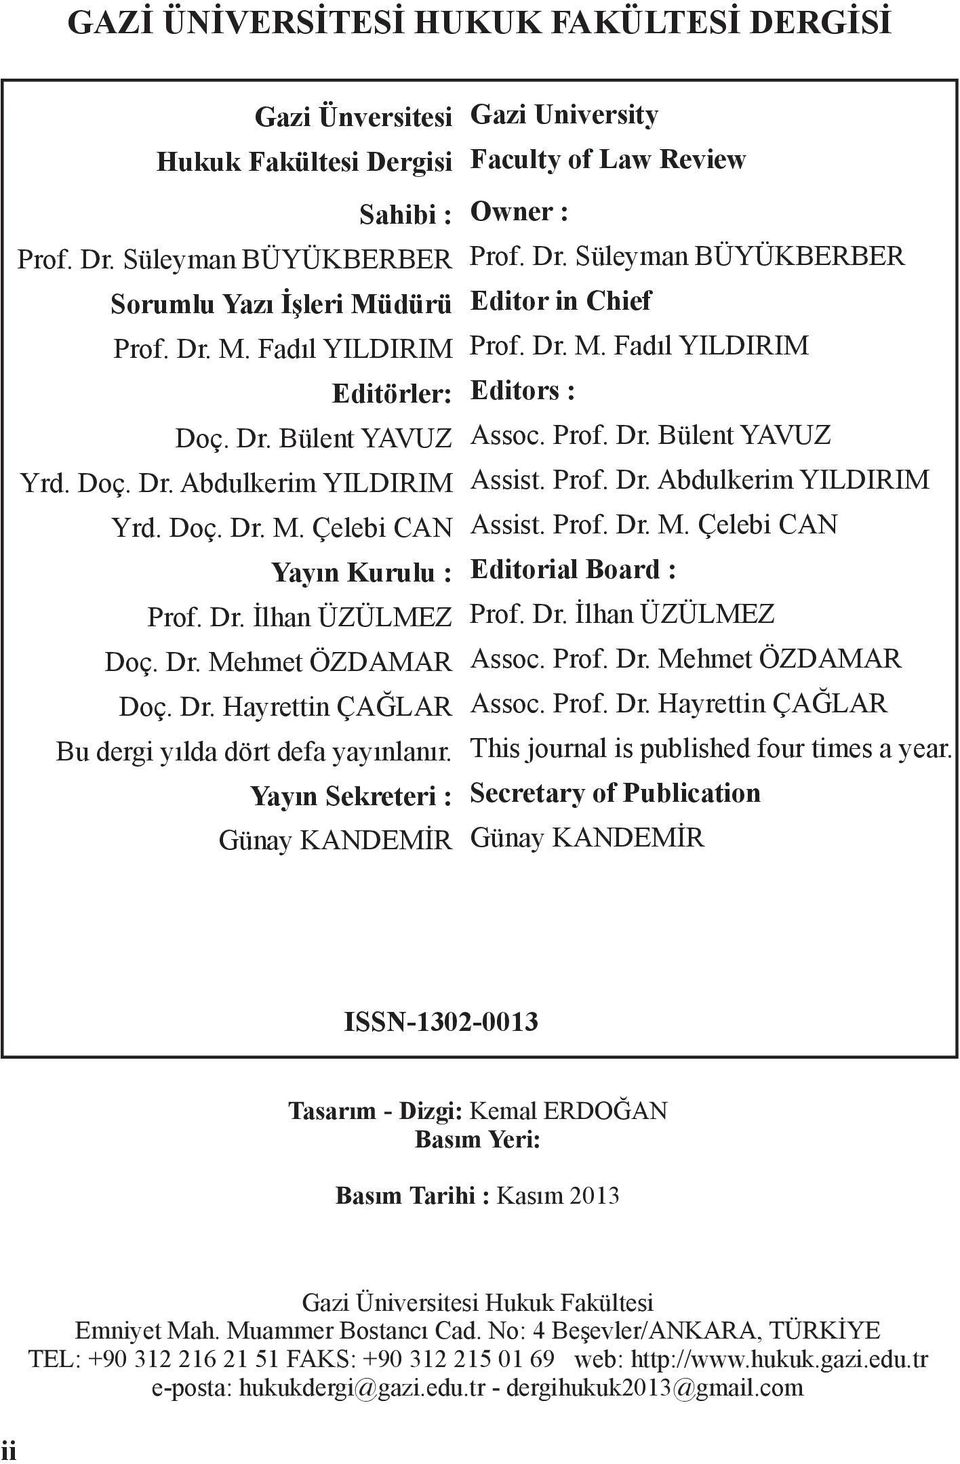 Yayın Sekreteri : Günay KANDEMİR Gazi University Faculty of Law Review Owner : Prof. Dr. Süleyman BÜYÜKBERBER Editor in Chief Prof. Dr. M. Fadıl YILDIRIM Editors : Assoc. Prof. Dr. Bülent YAVUZ Assist.